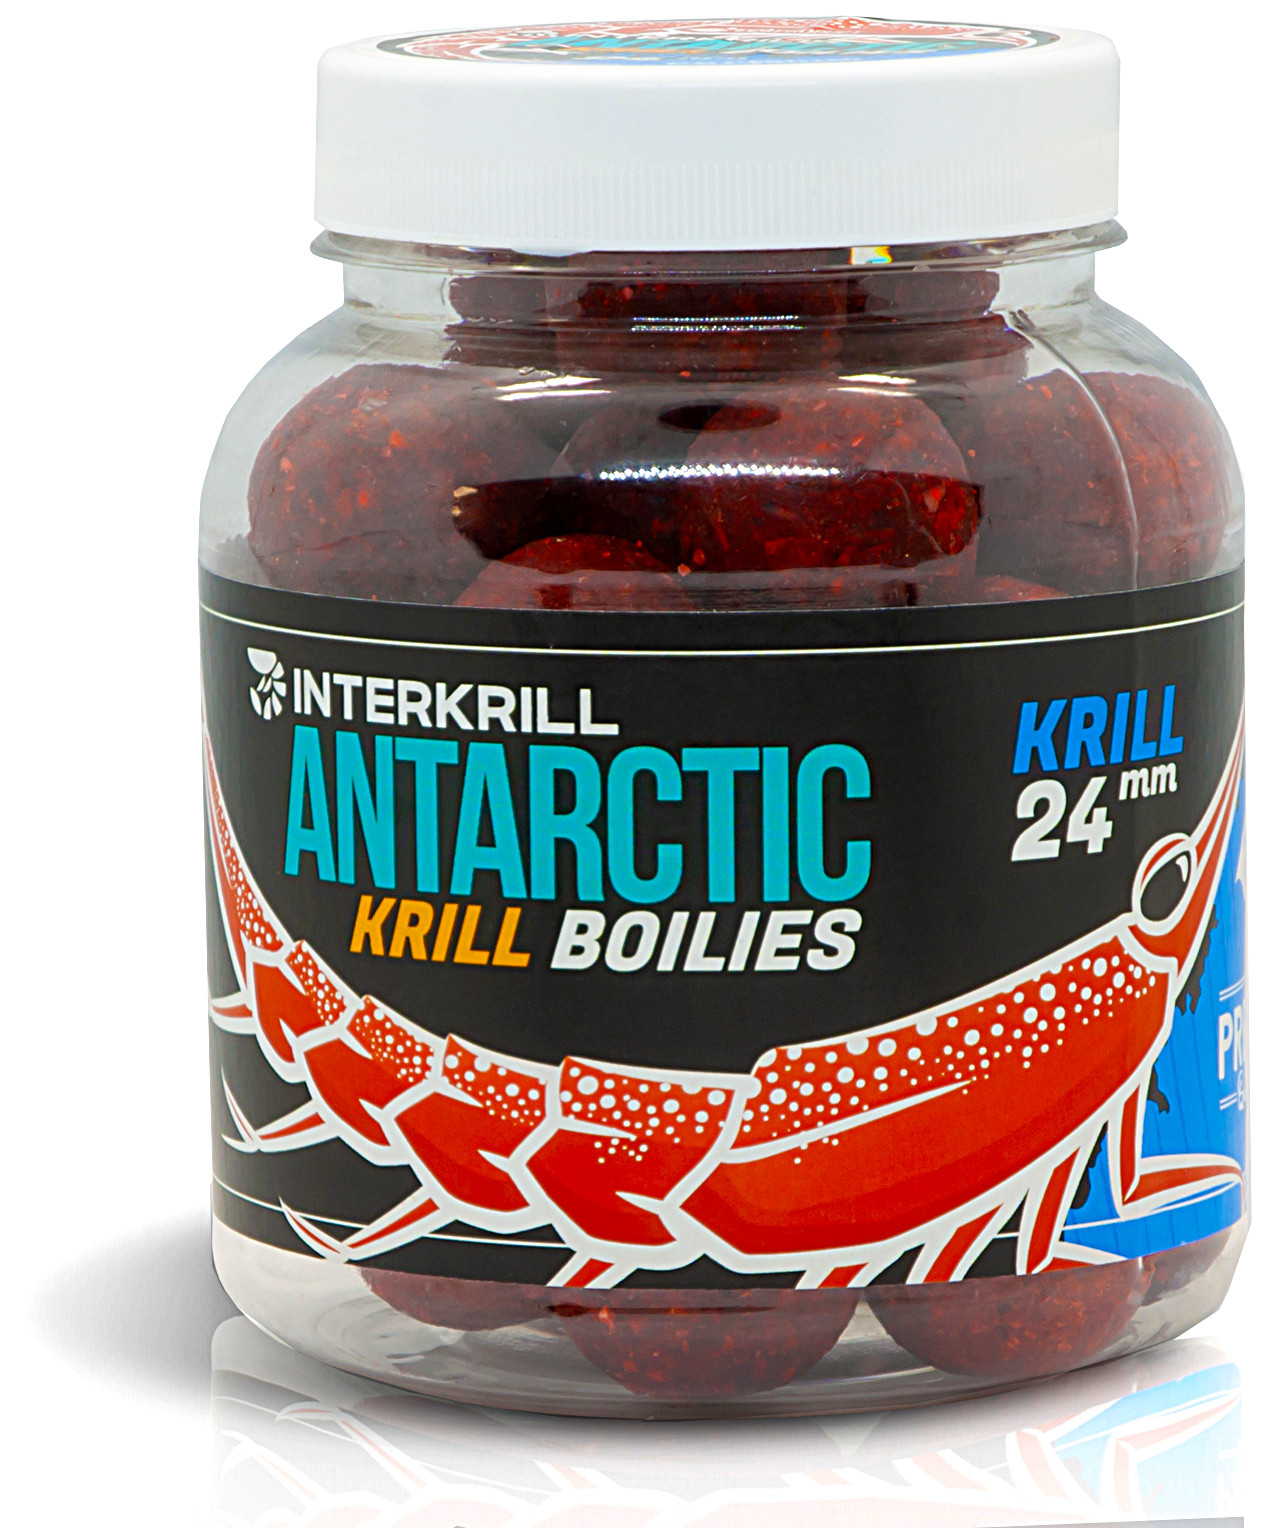 Бойл вареный насадочный “KRILL” 24мм / Antarctic Krill Boilies “KRILL” 250g